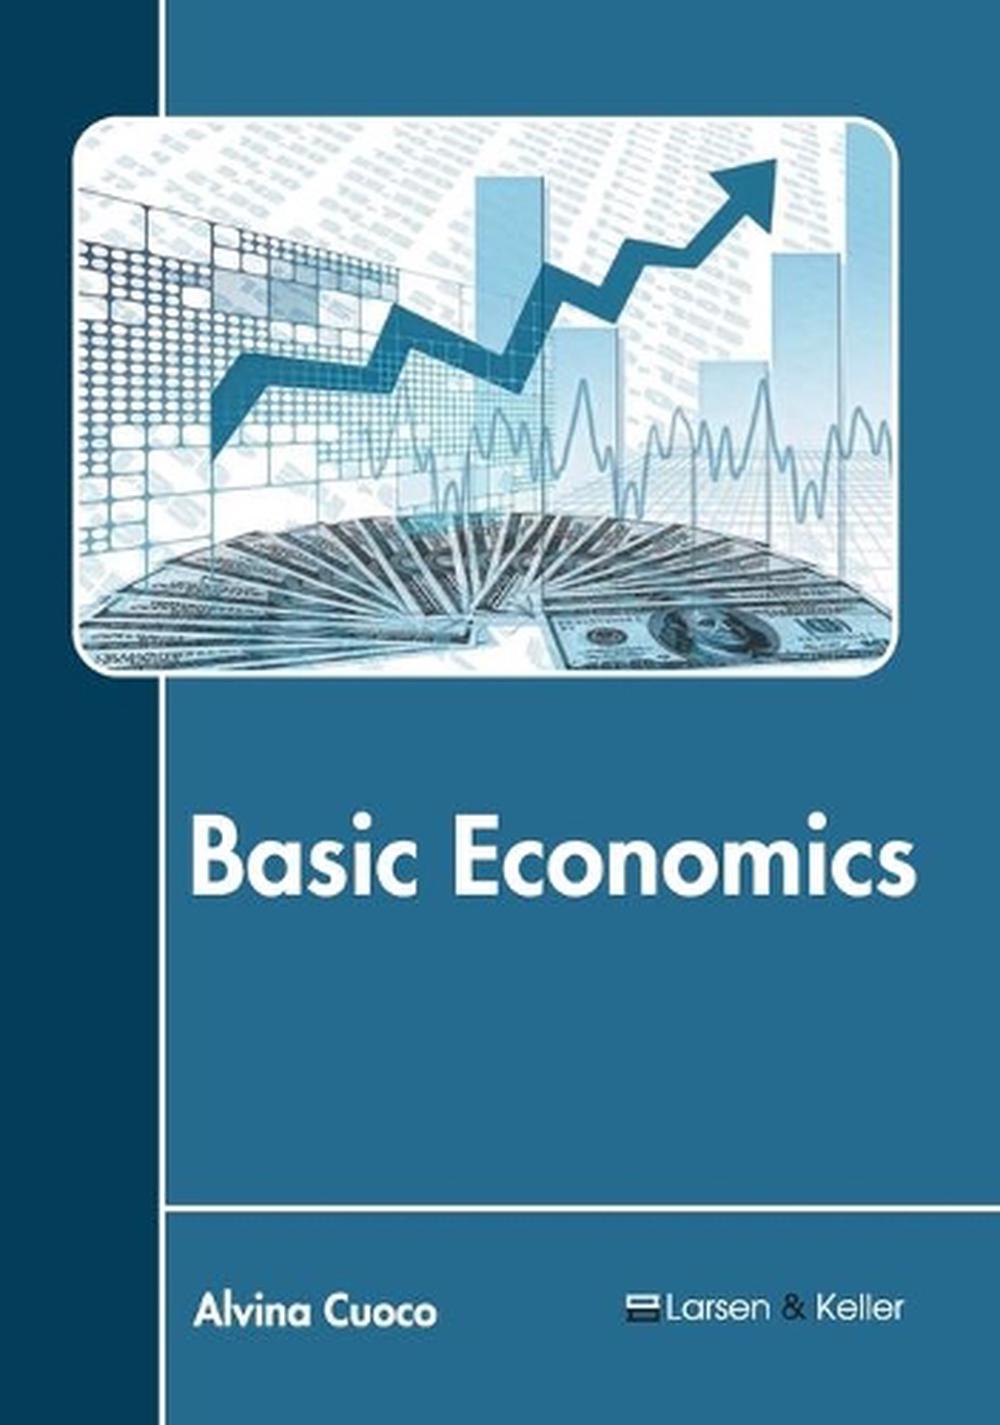 basic economics thomas sowell 6th edition